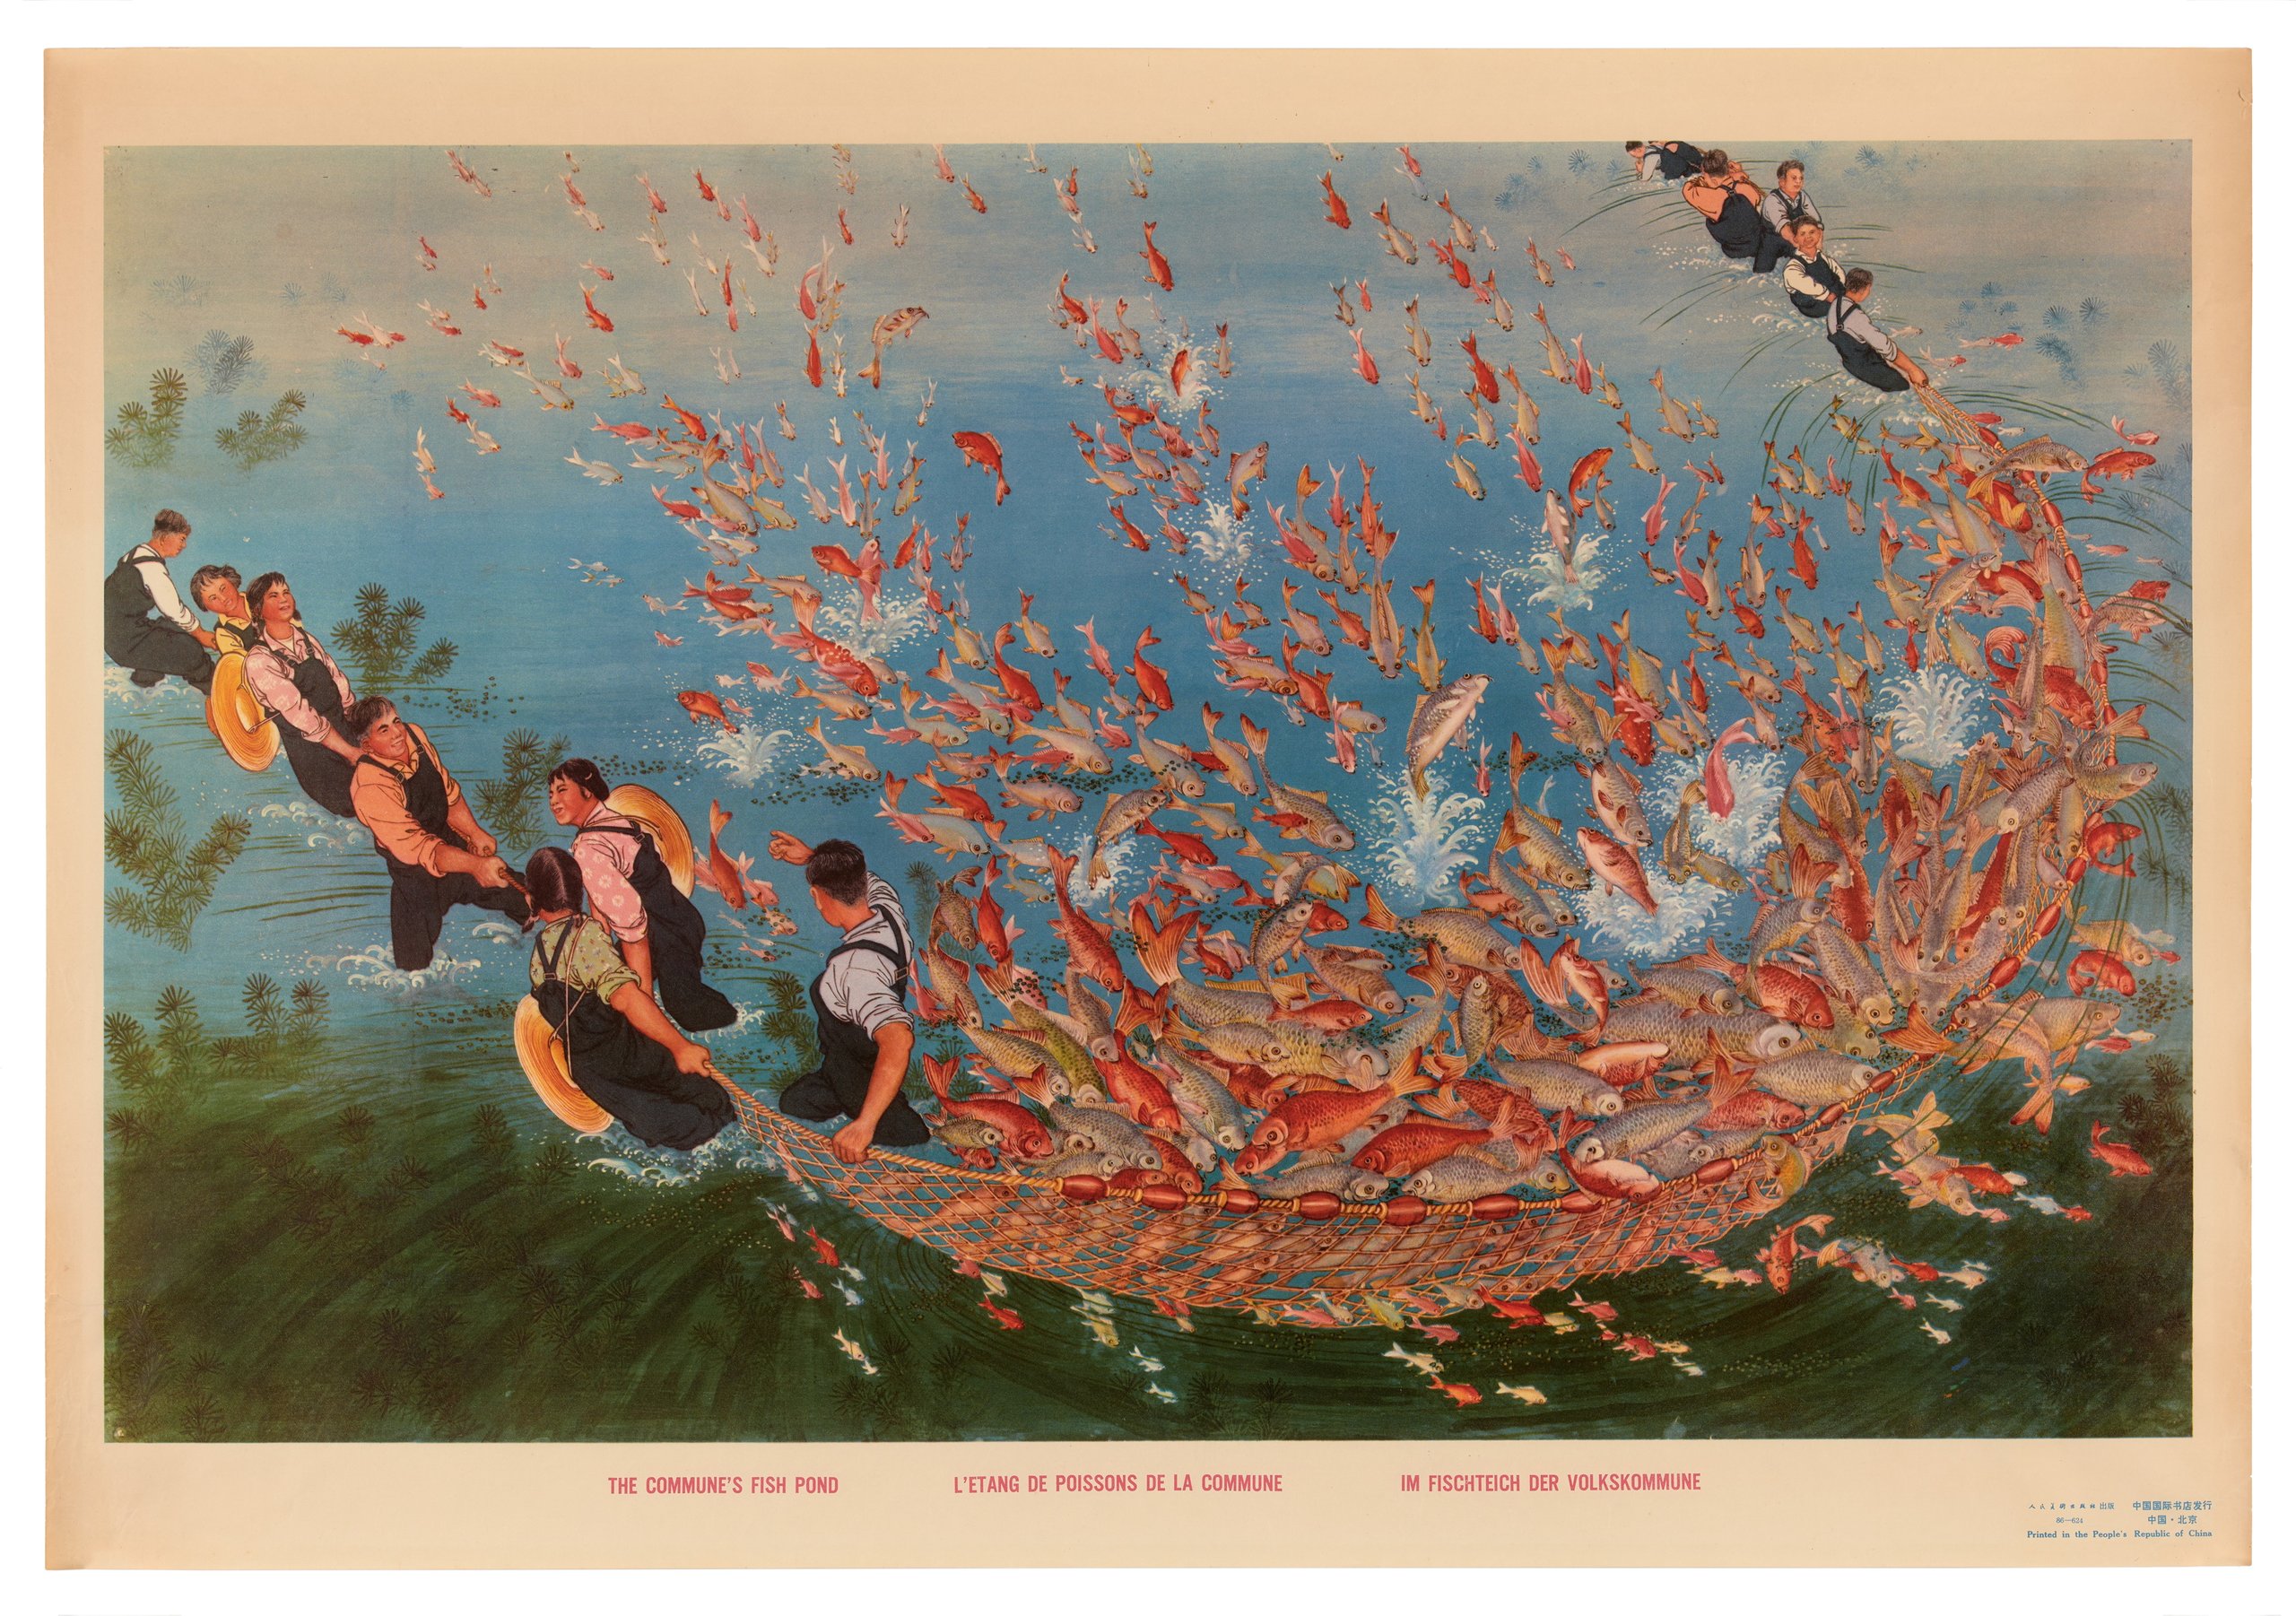 'The Commune's Fish Pond' Chinese propaganda poster